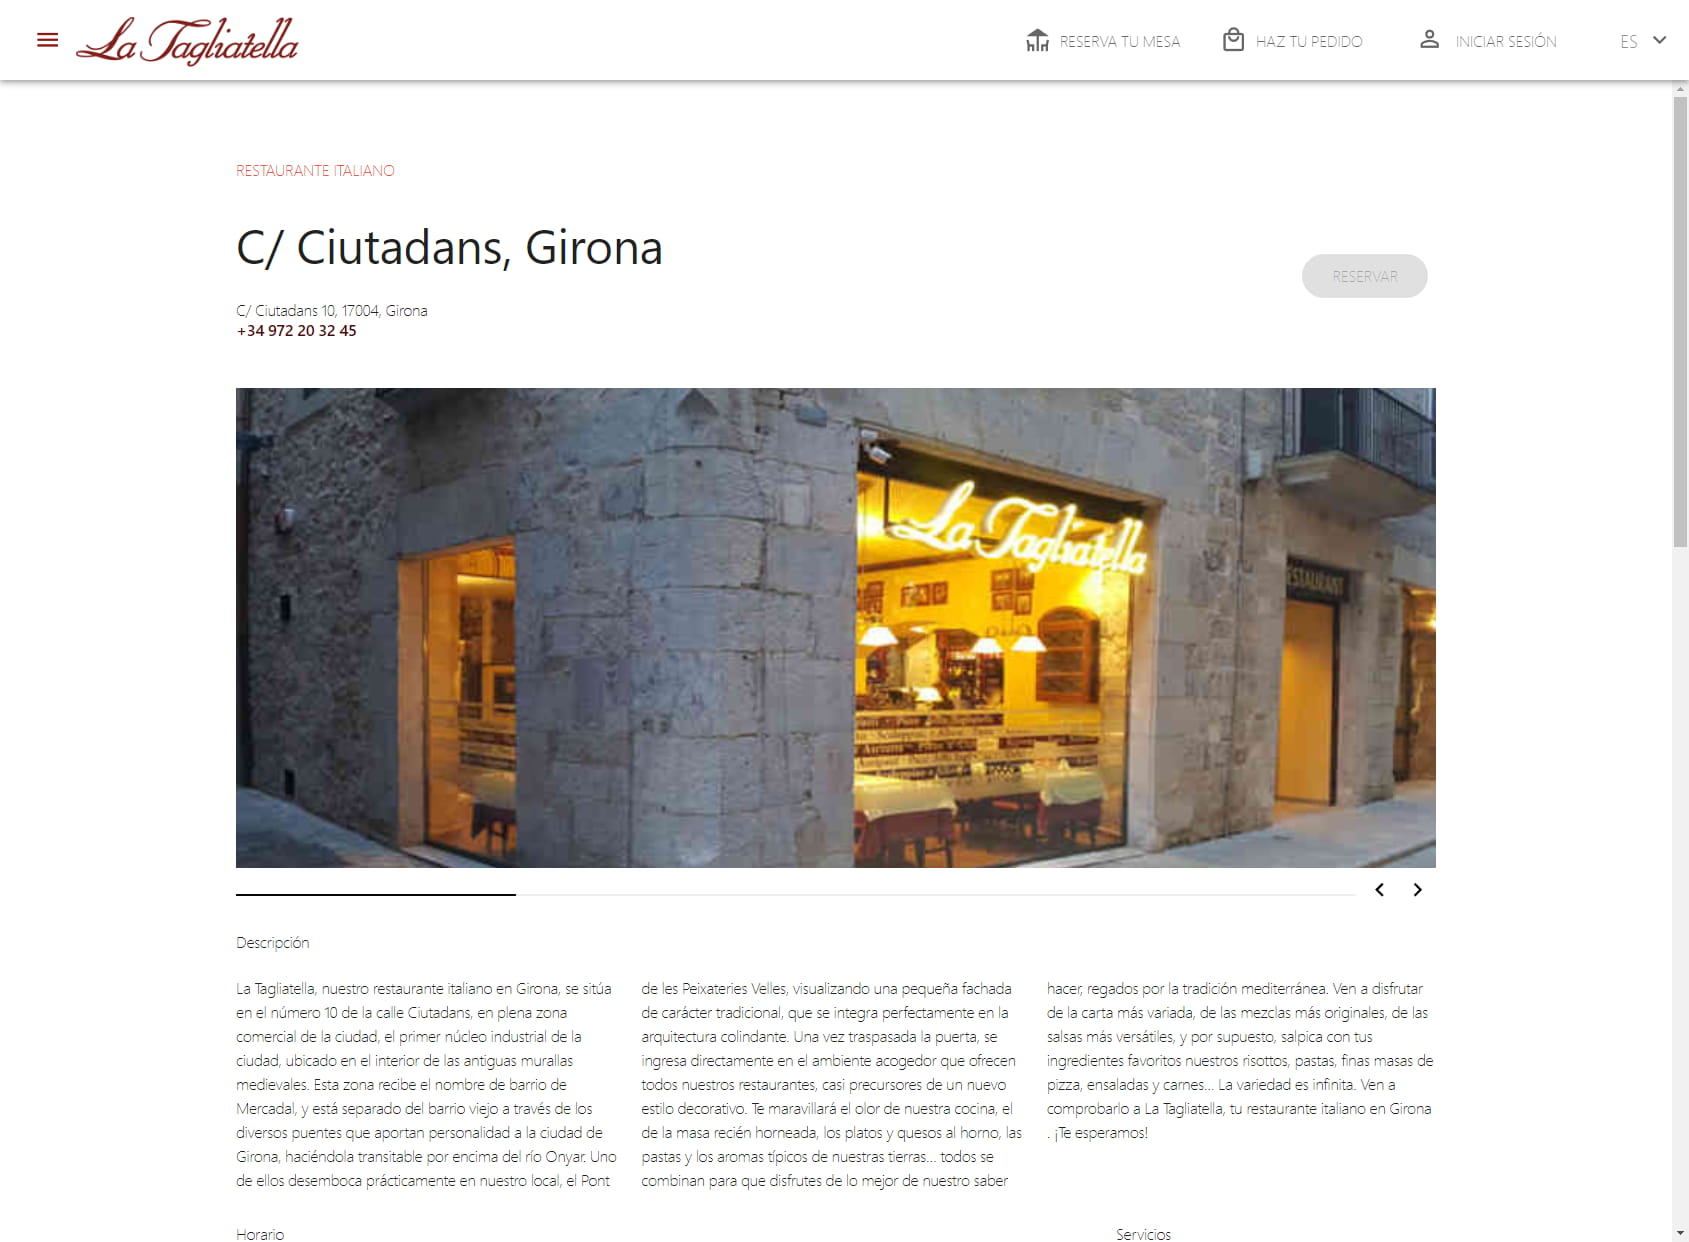 Restaurant La Tagliatella | C/ Ciutadans, Girona